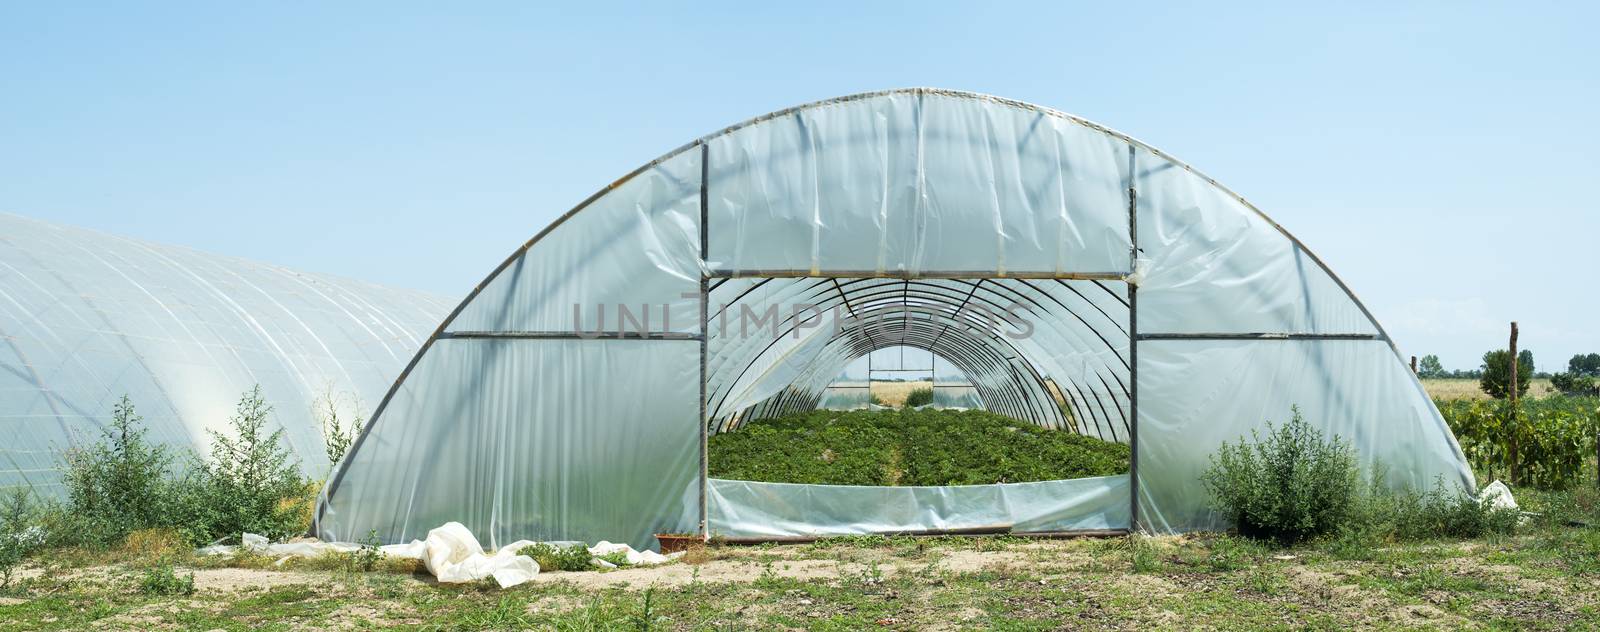 Greenhouses plantations